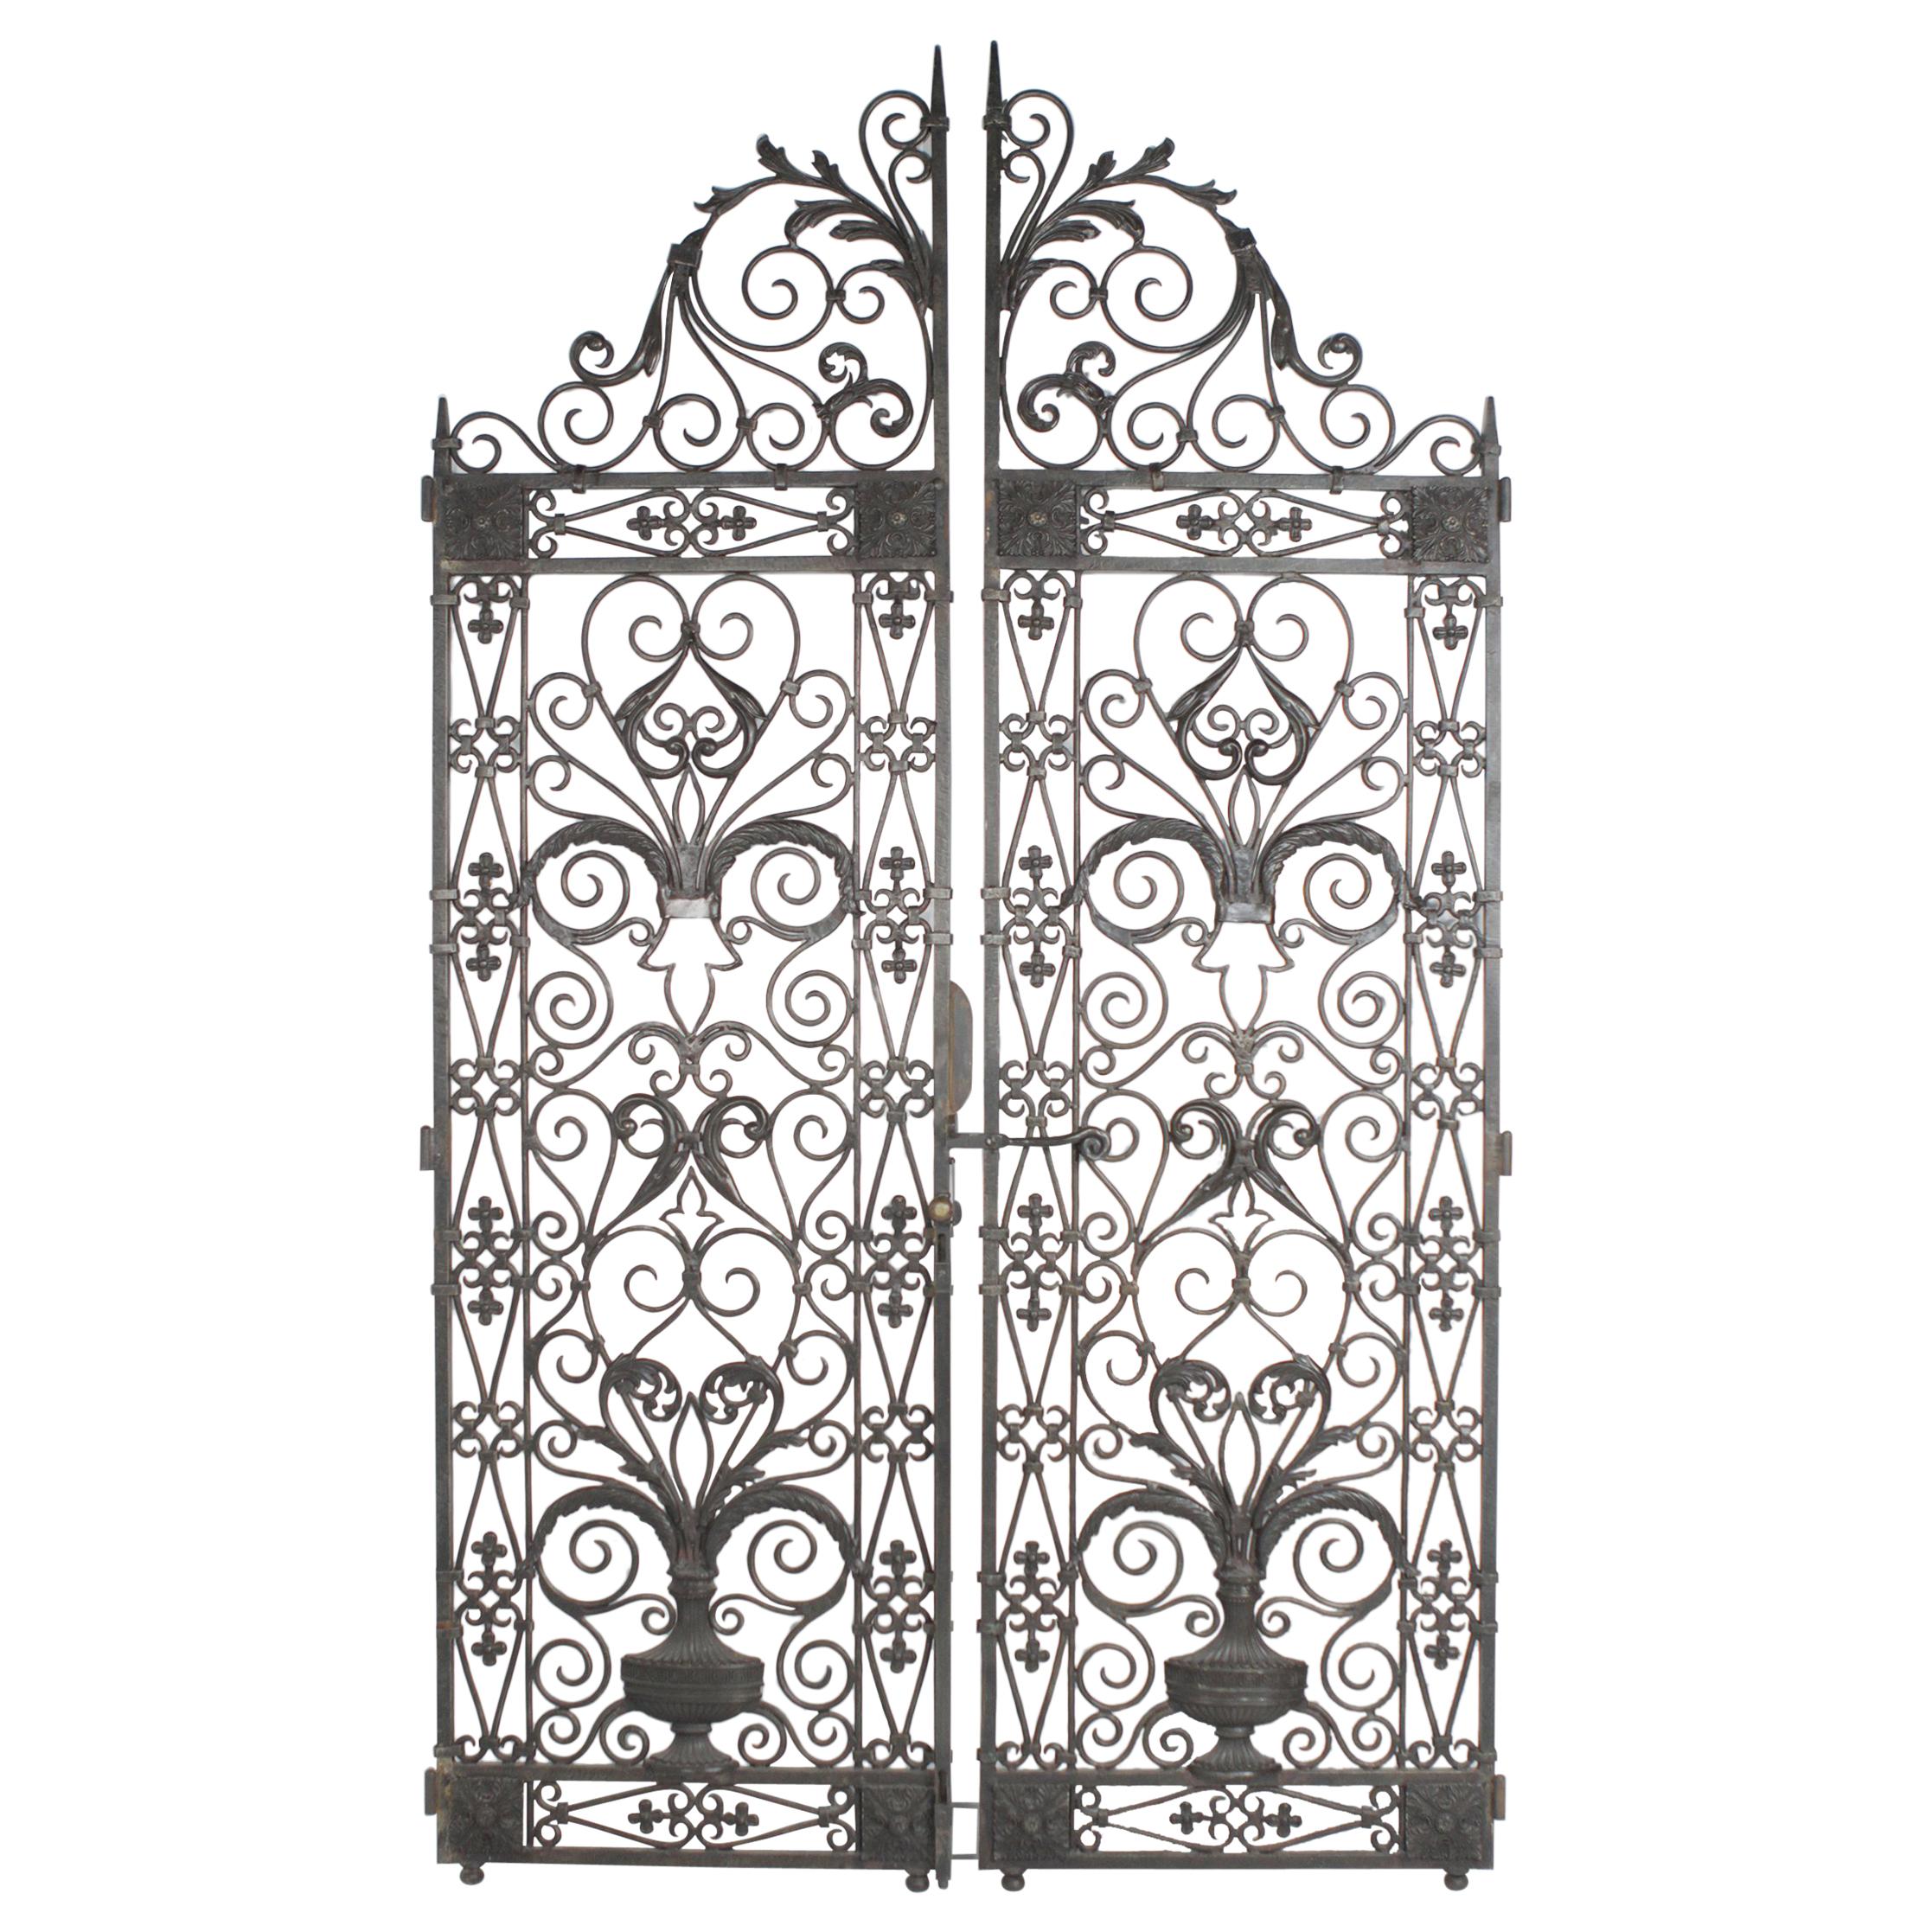 Super Impressive Pair of European Hand Wrought Iron Ornate Architectural Gates